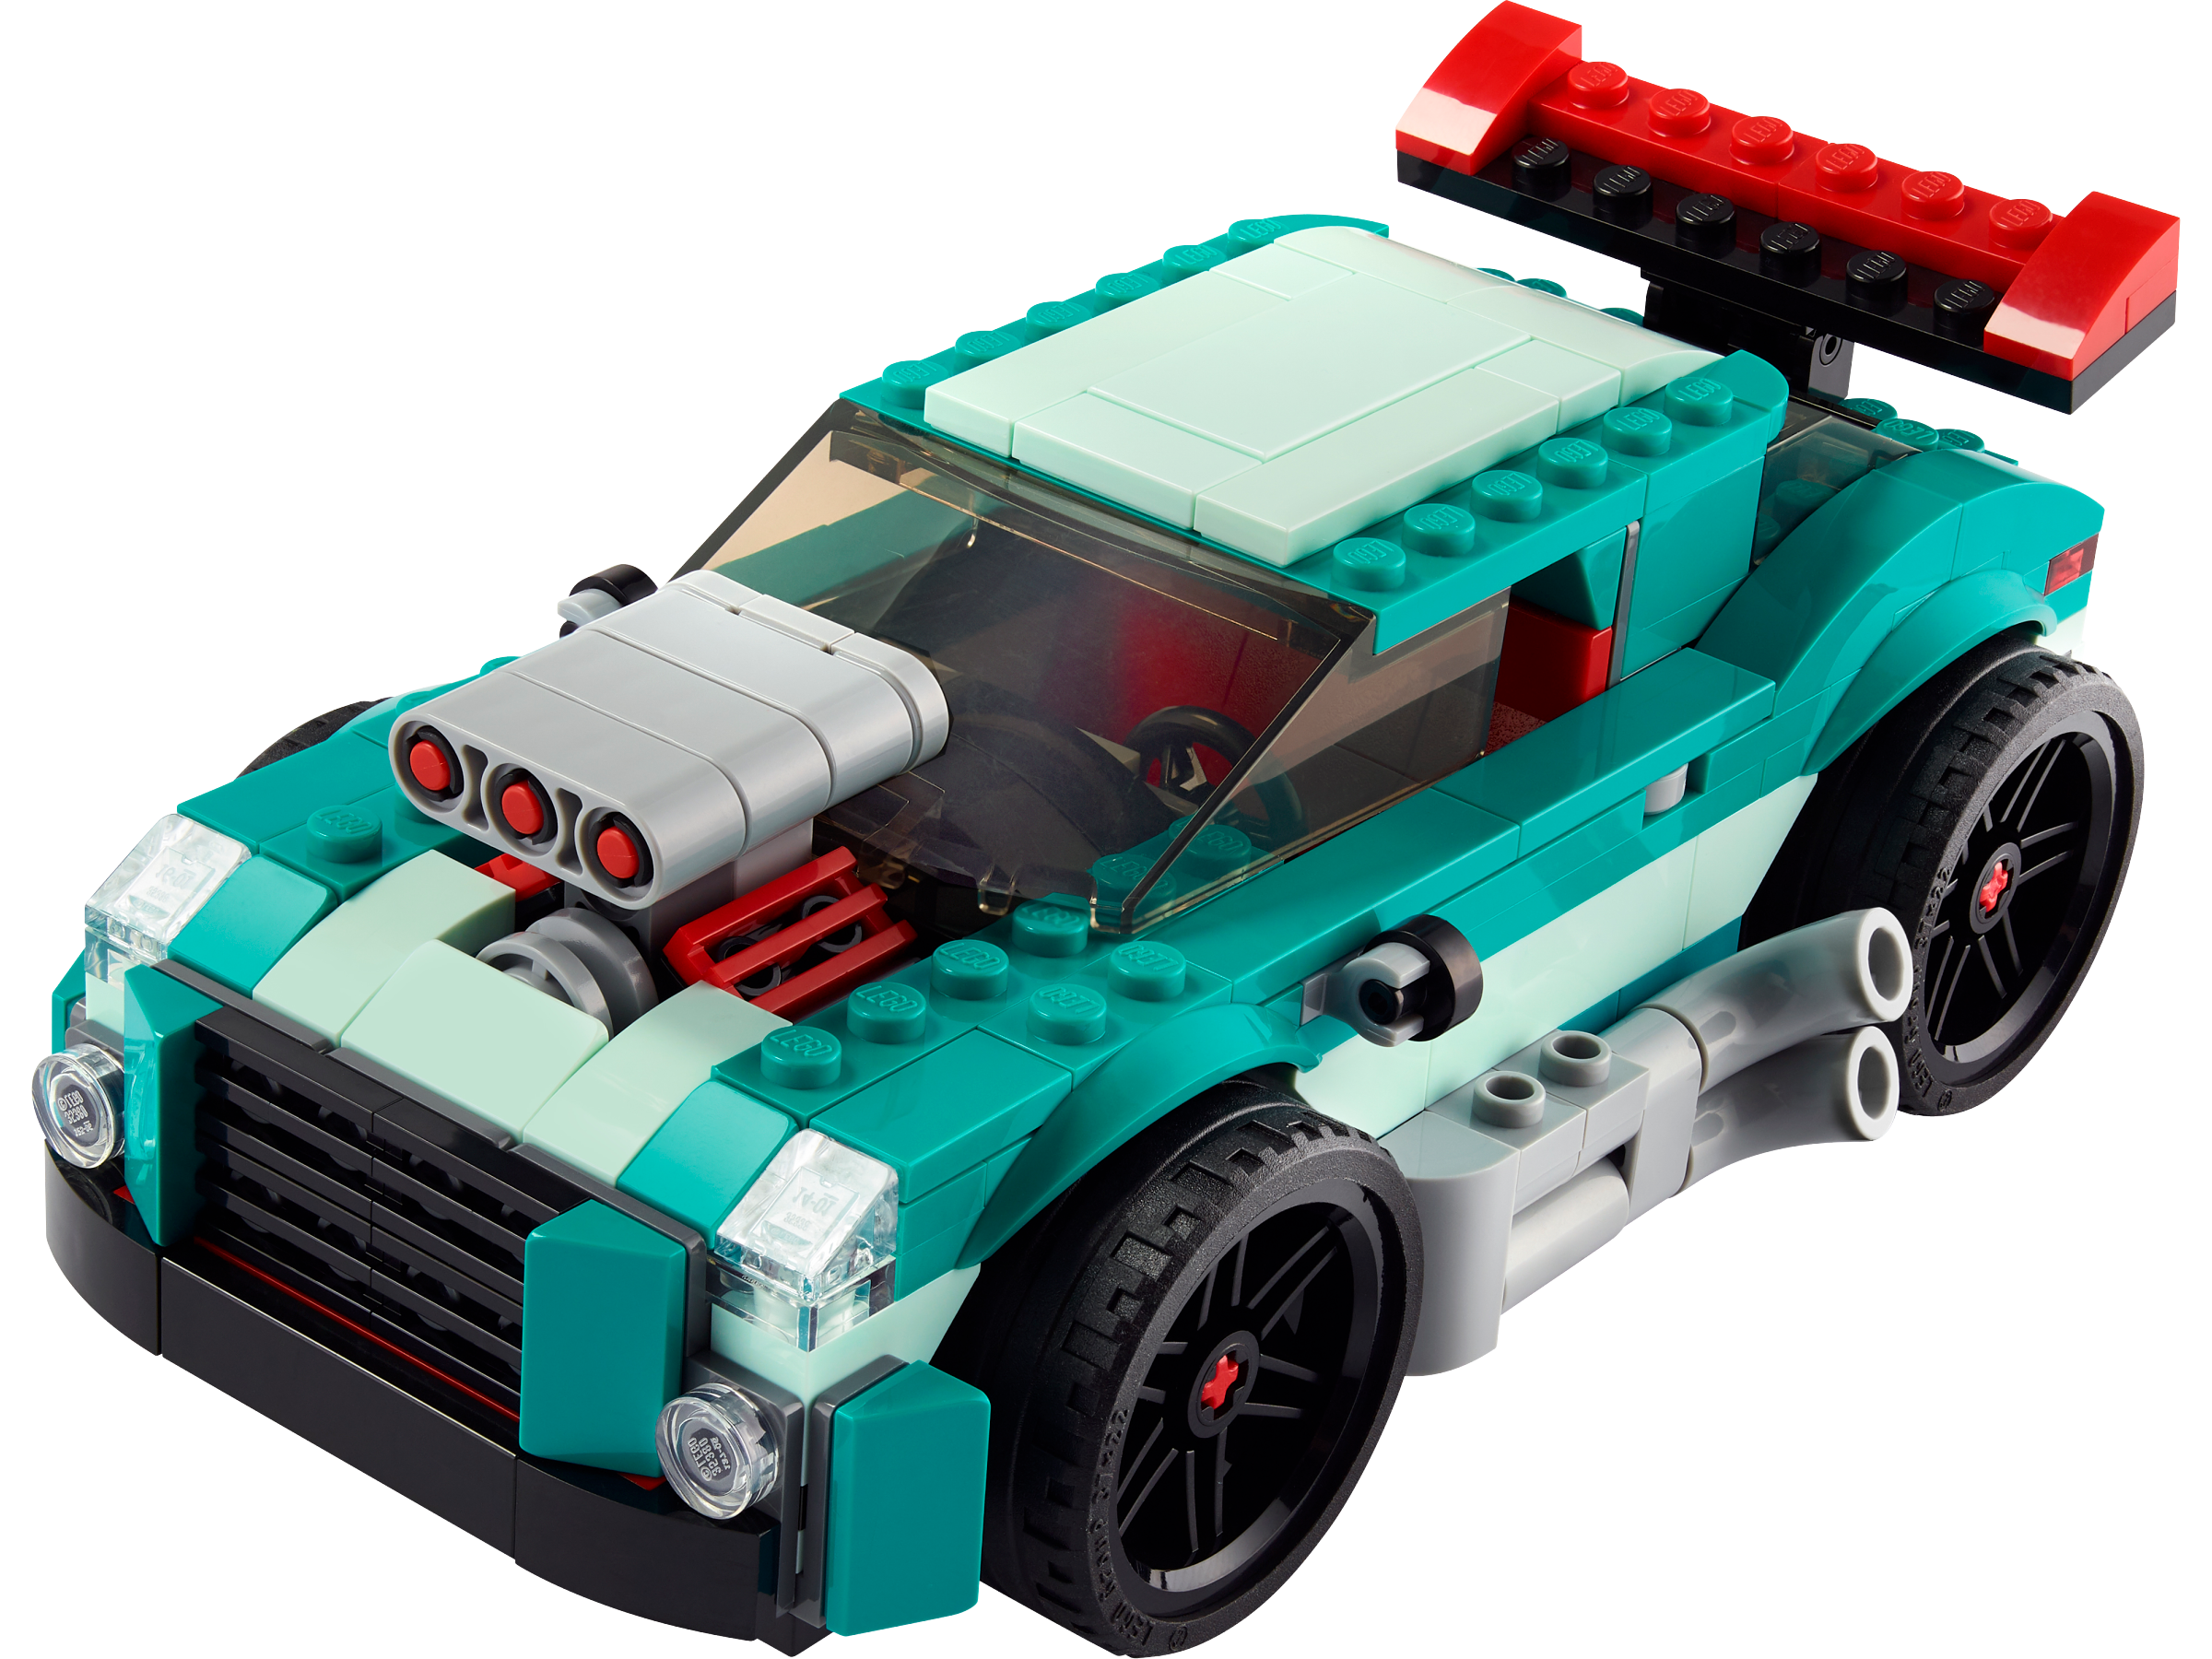 Mini Carrinho De Corrida De Brinquedo Educativo Racer 55